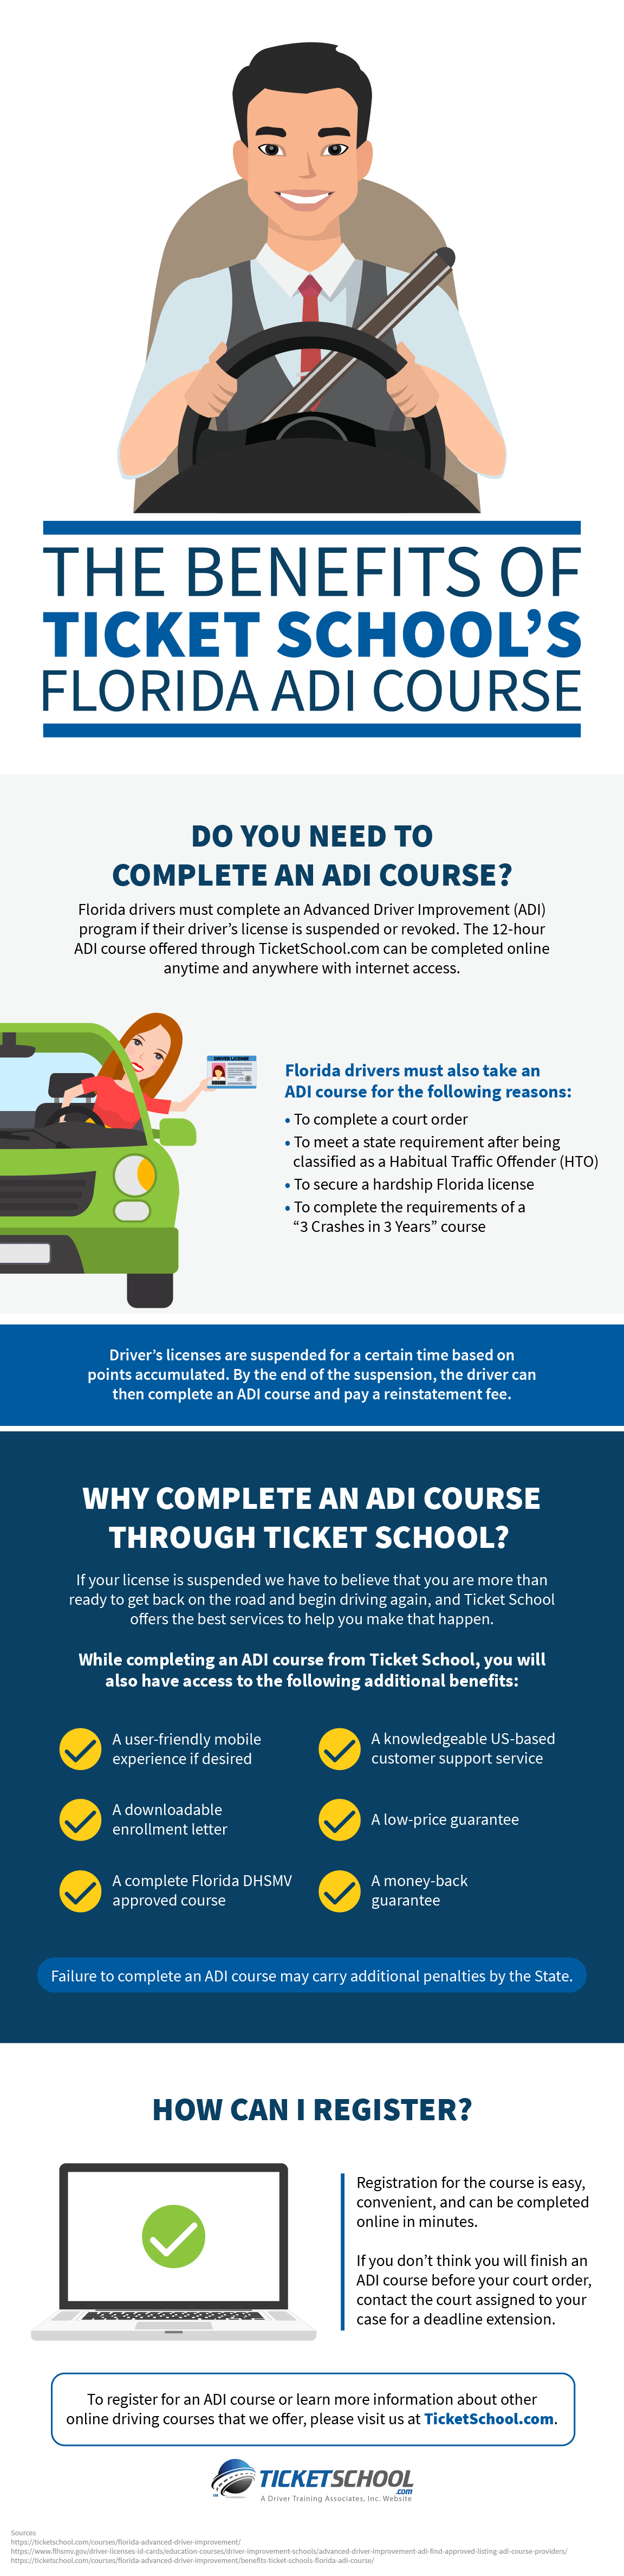 The Benefits of Ticket School’s Florida ADI Course [Infographic]